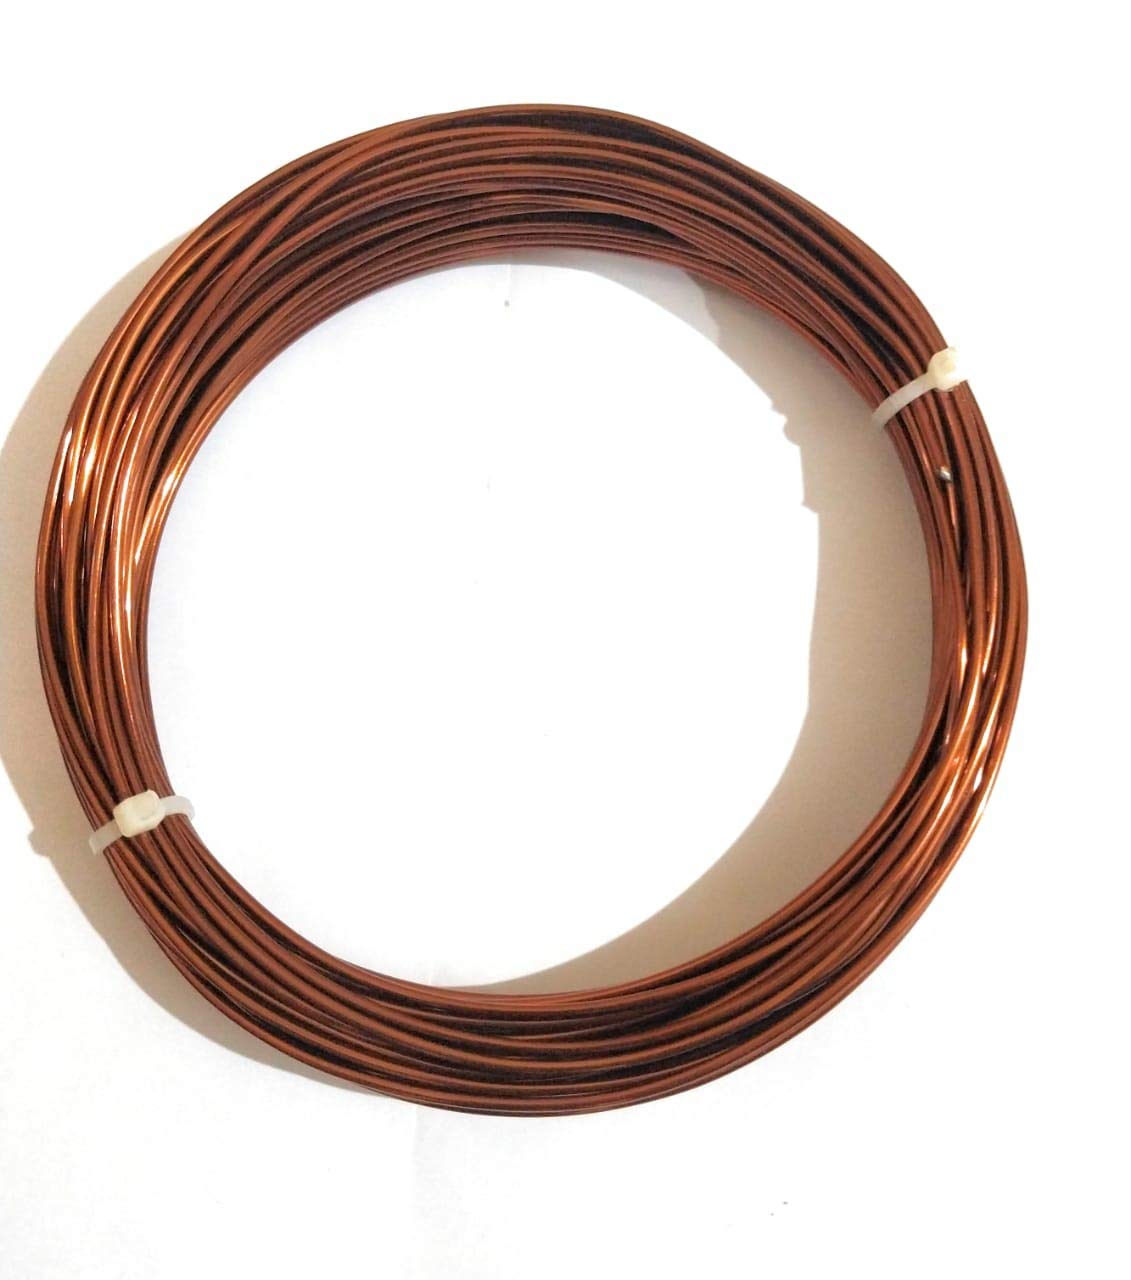 Multi Purpose Copper Wire, 28 Gauge, 5 m Length